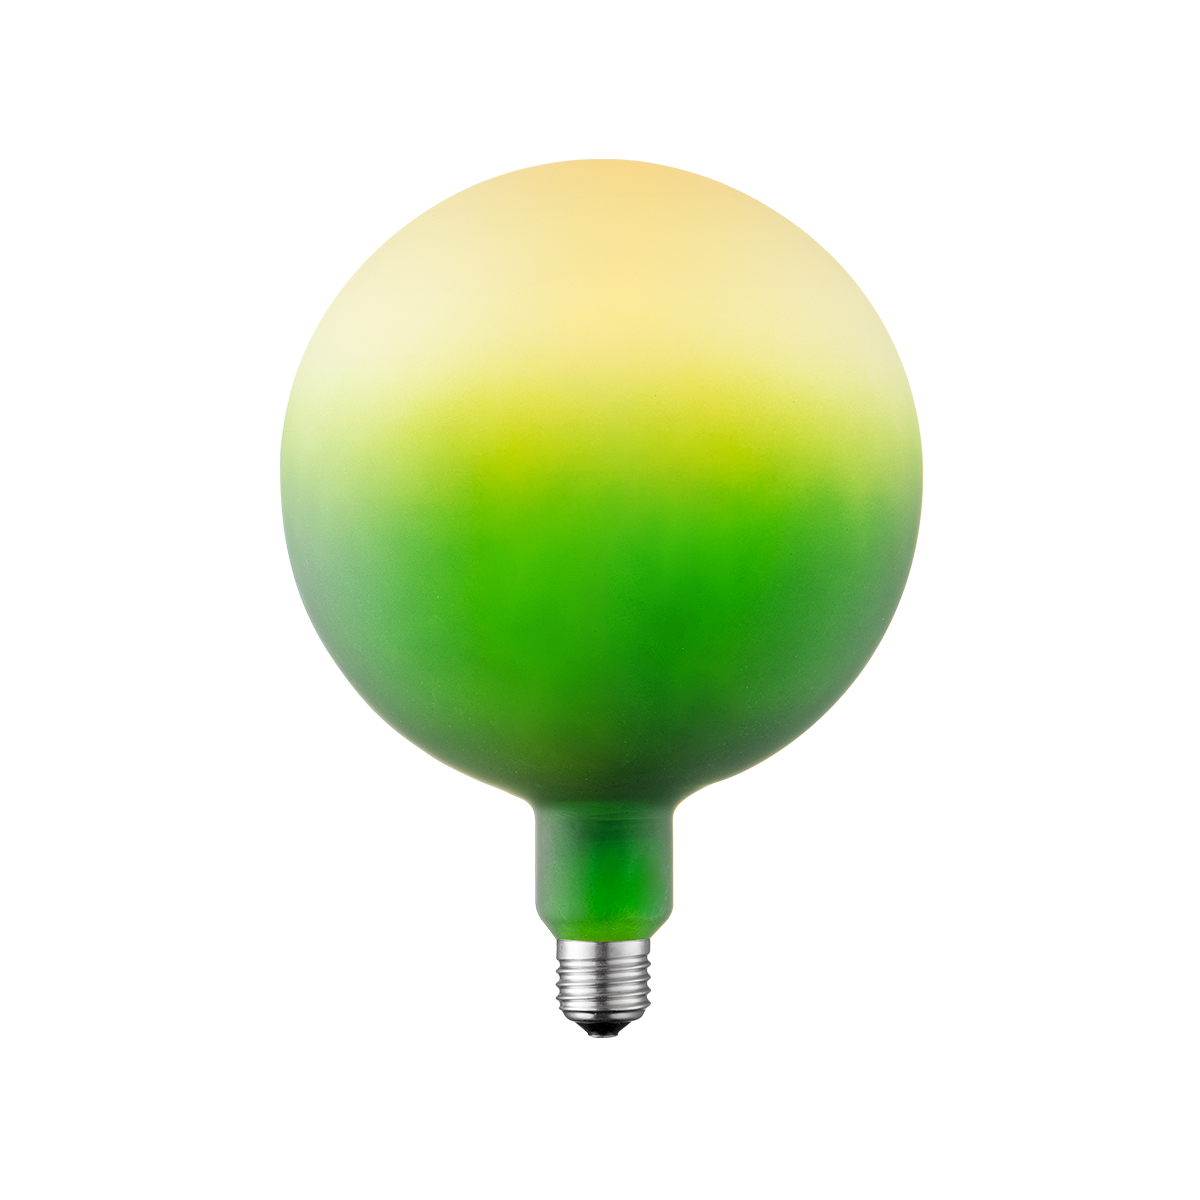 Tangla lighting - TLB-9006-04O - LED Light Bulb Single Spiral filament - G180 4W gradient green opal - non dimmable - E27